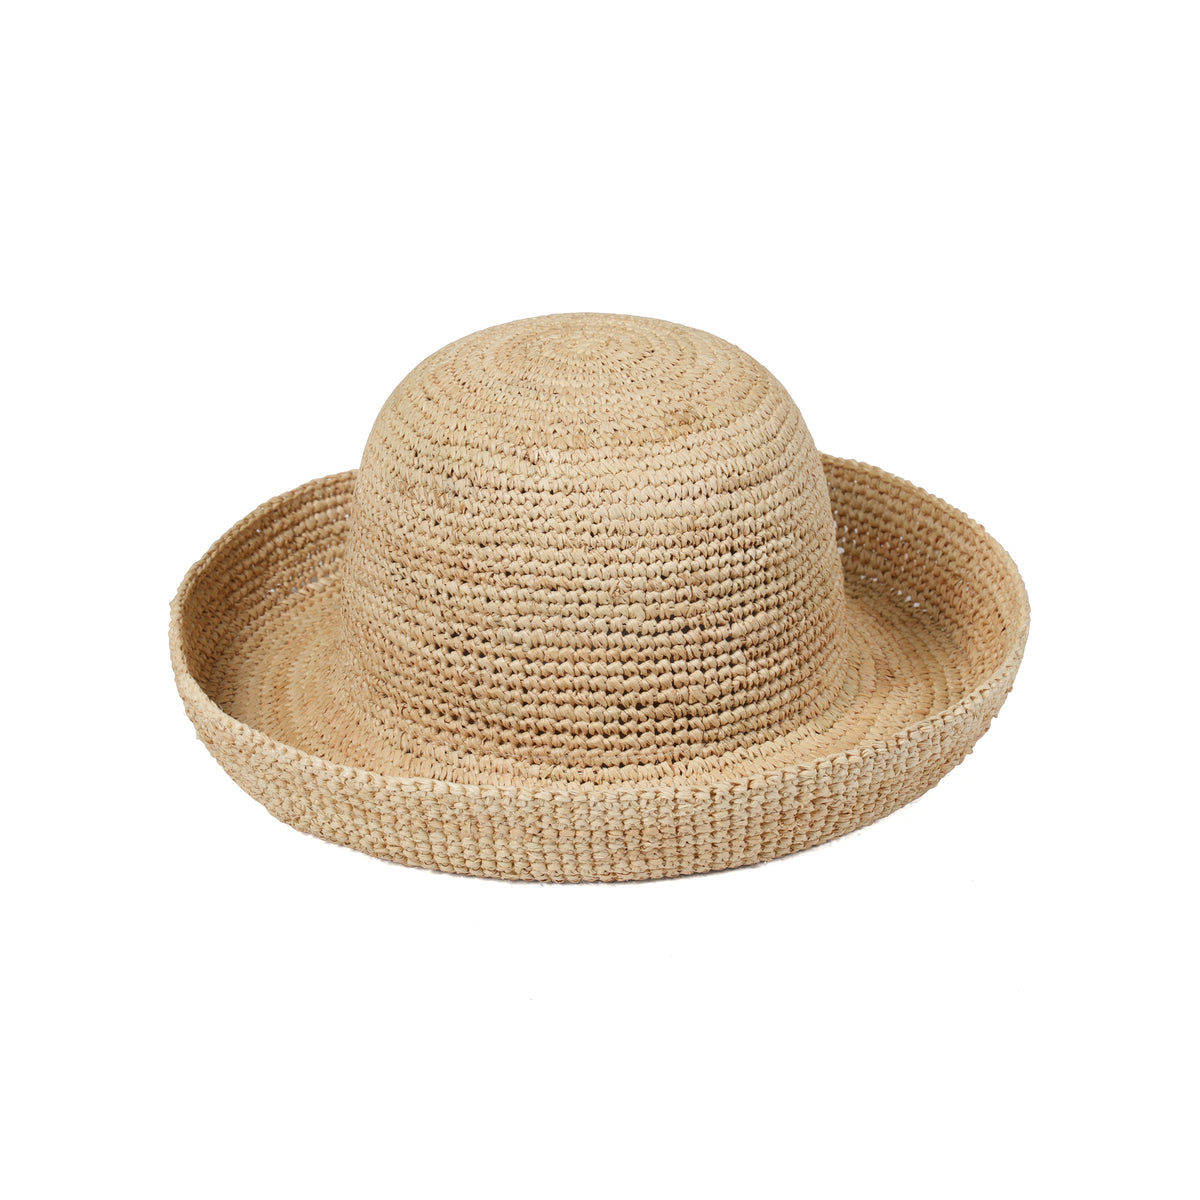 Raffia Cruiser - Straw Boater Hat in Natural | Lack of Color